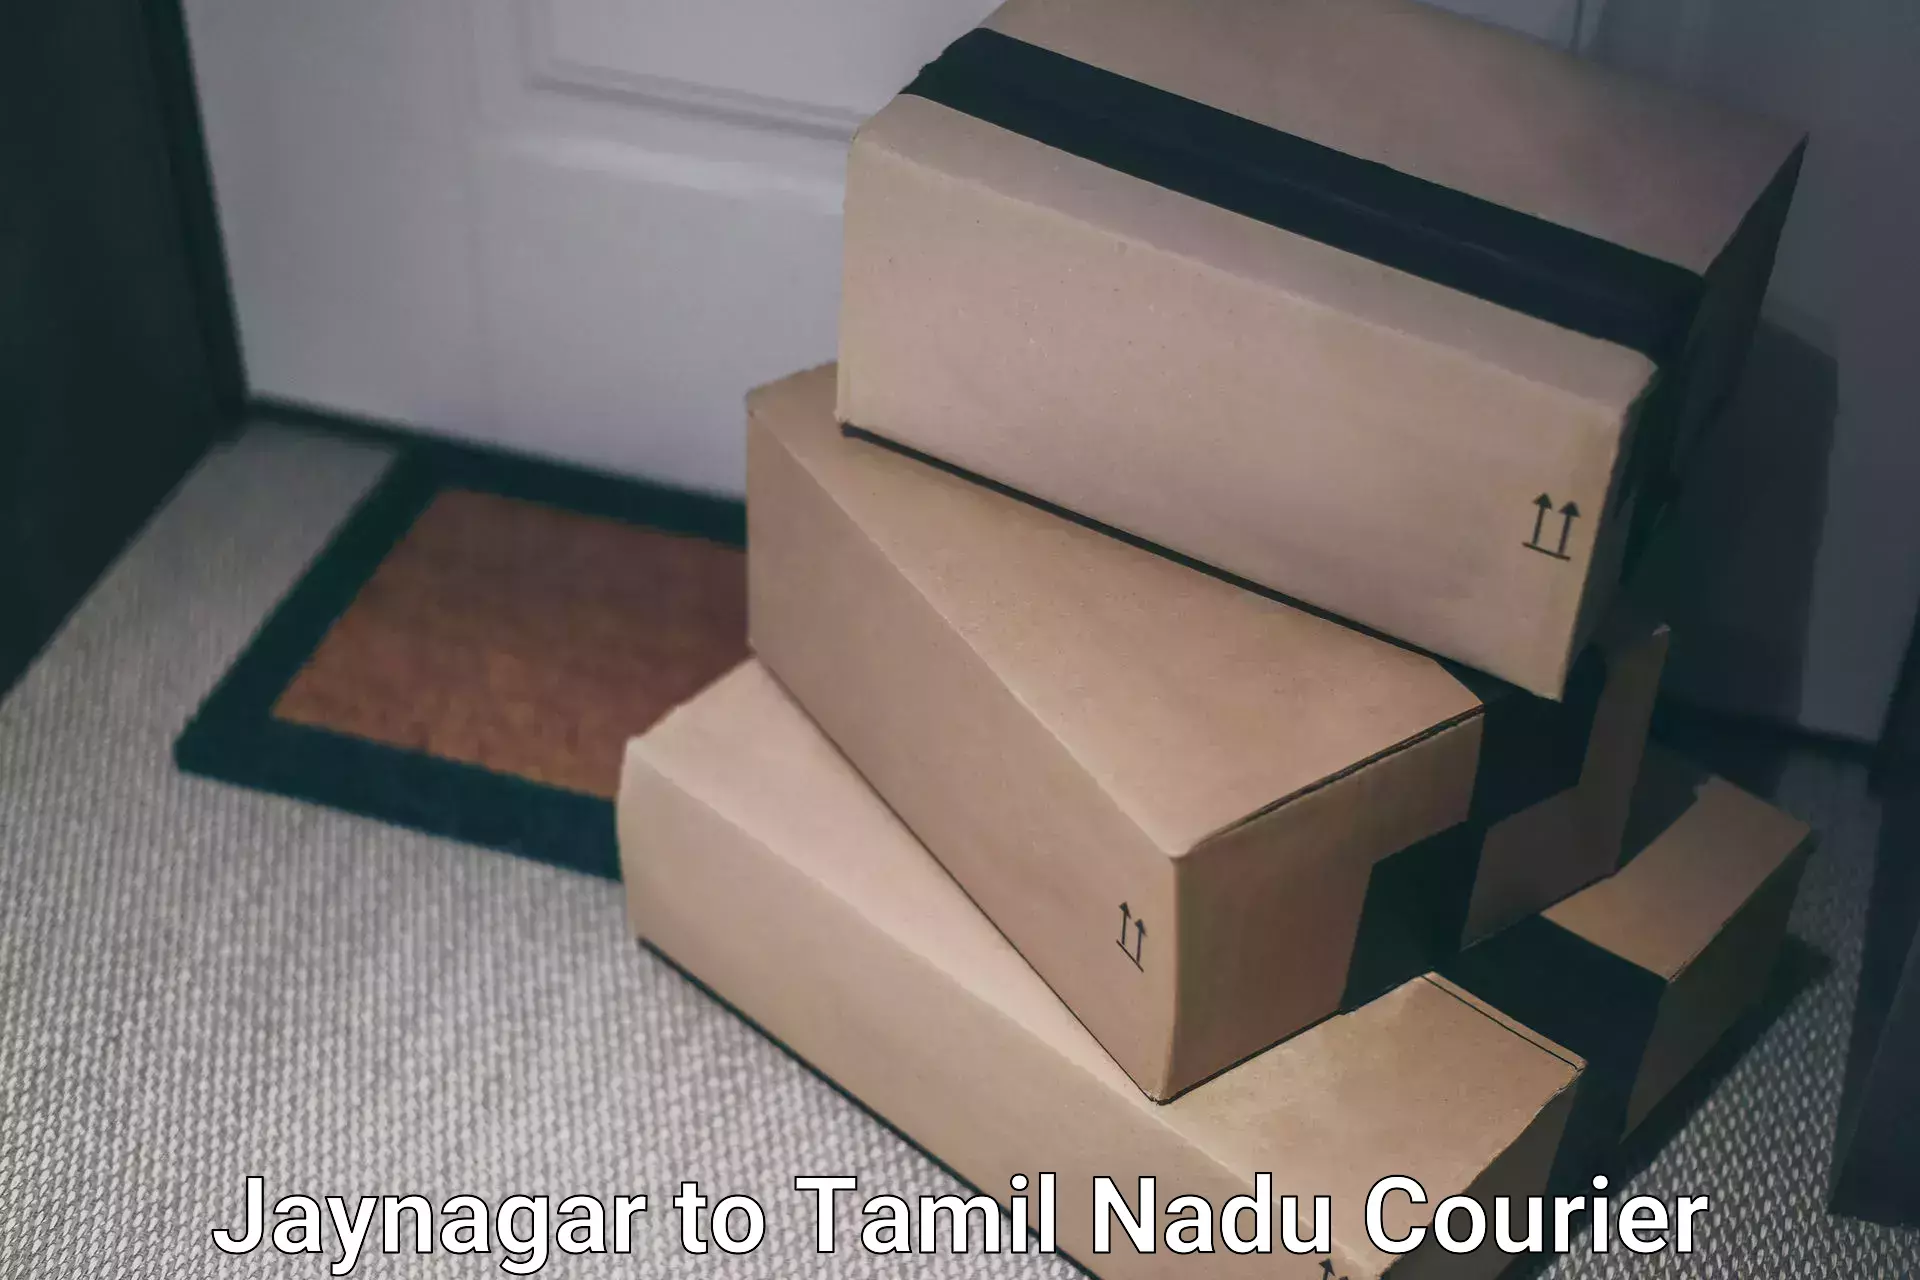 Bulk shipping discounts Jaynagar to Chennai